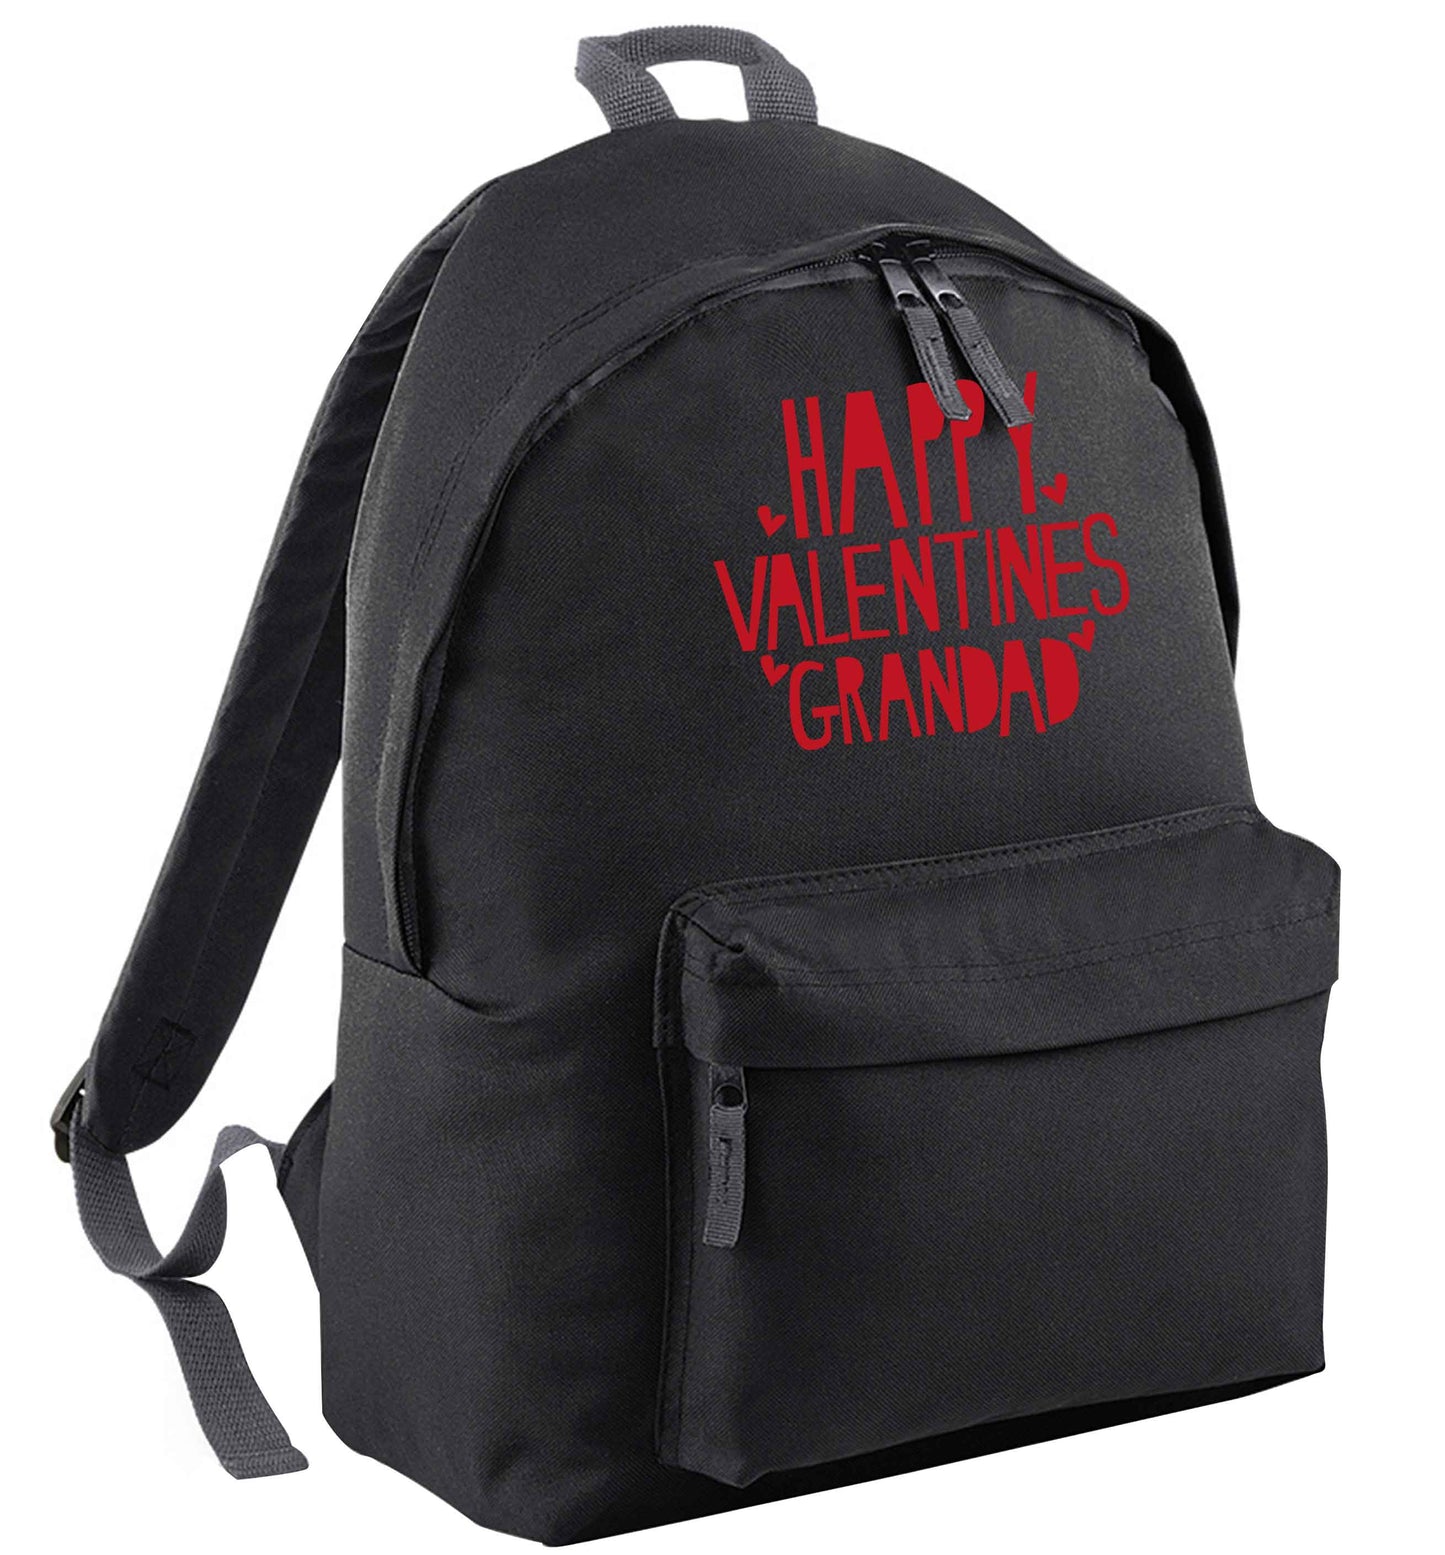 Happy valentines grandad | Adults backpack